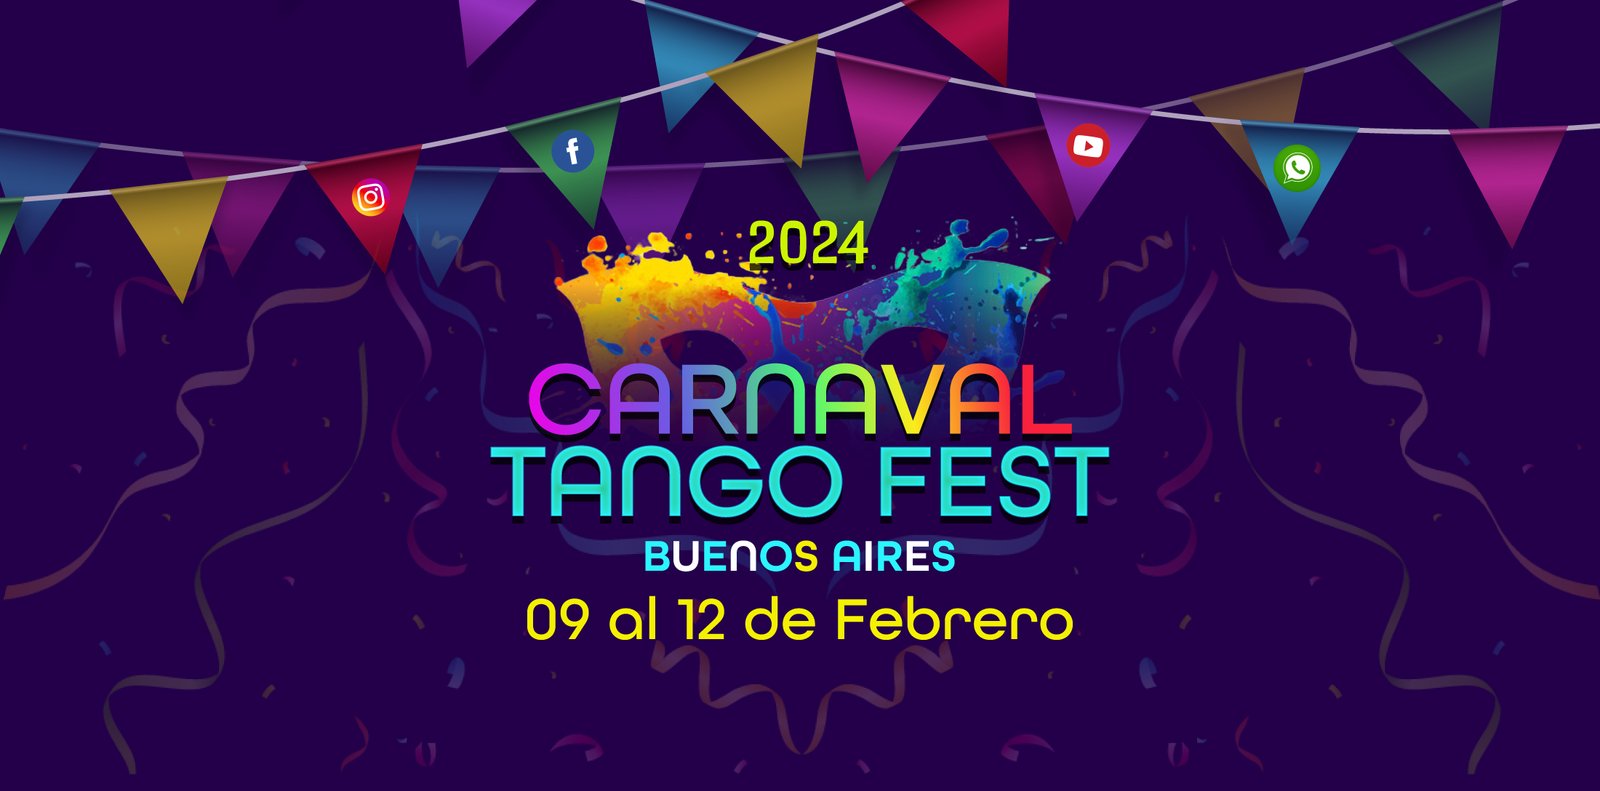 CARNAVAL TANGO FEST 2024